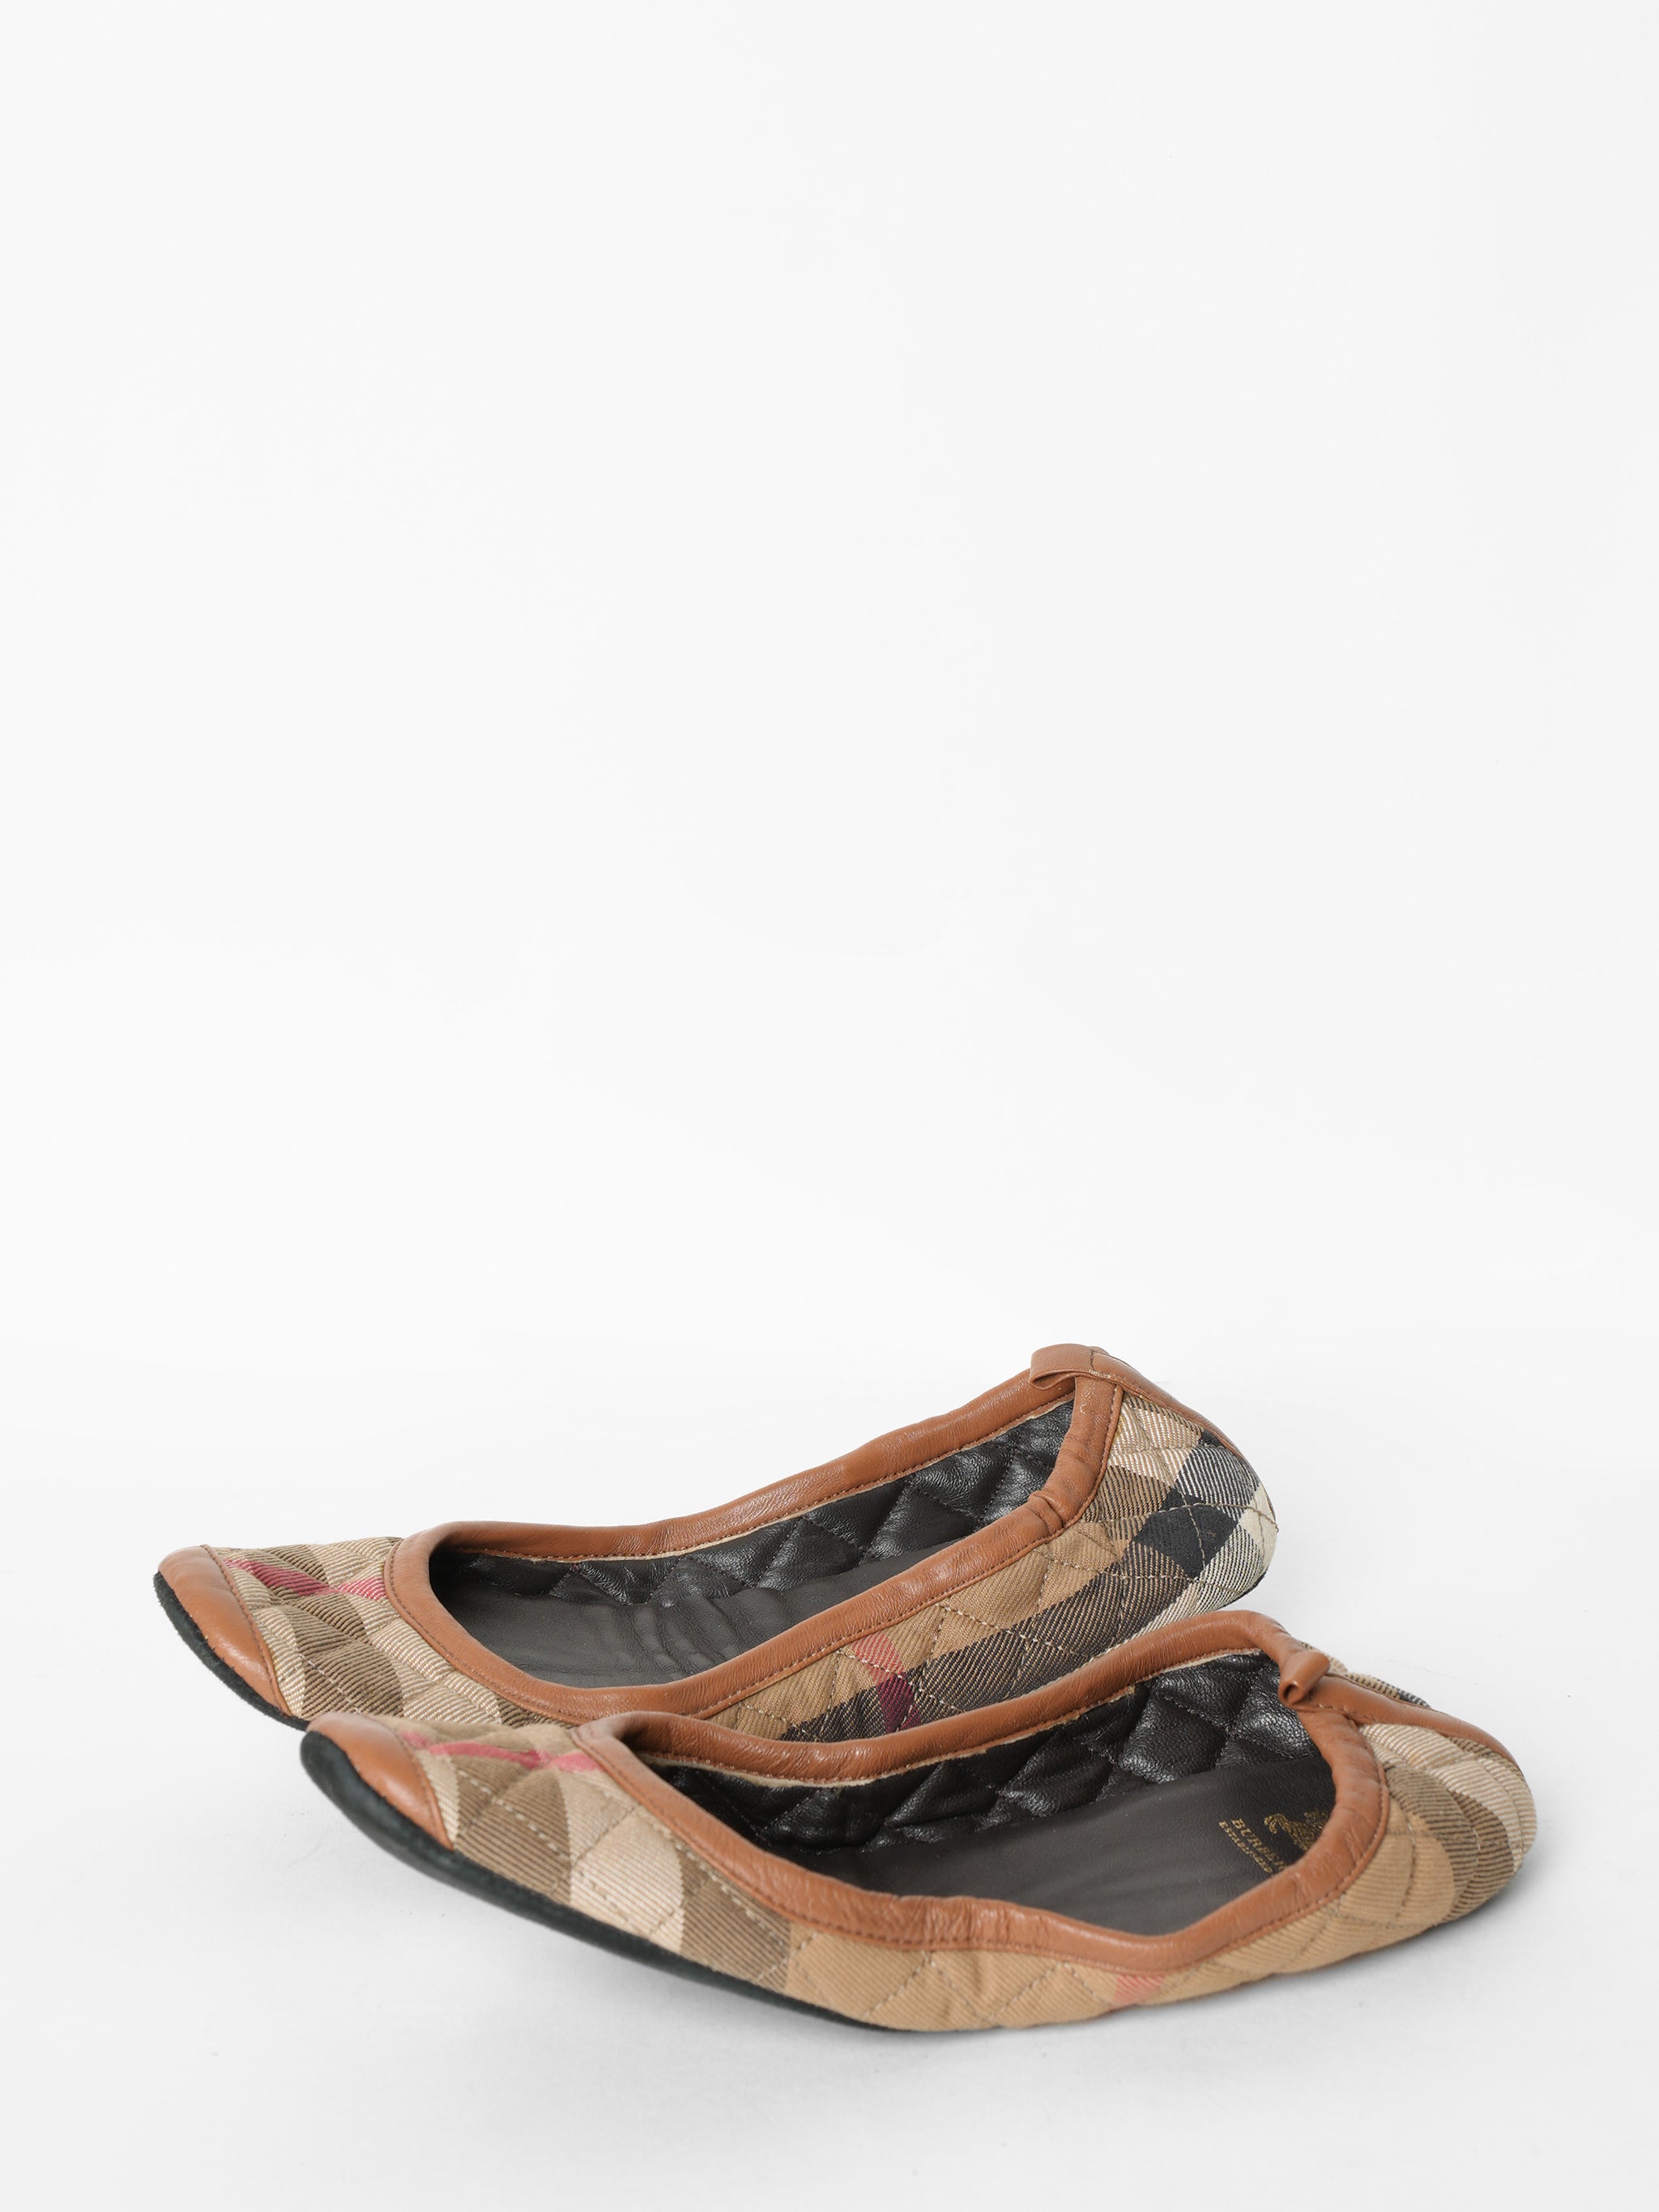 Burberry Ballet Flat Foldable Home Shoes/ Flight Shoes